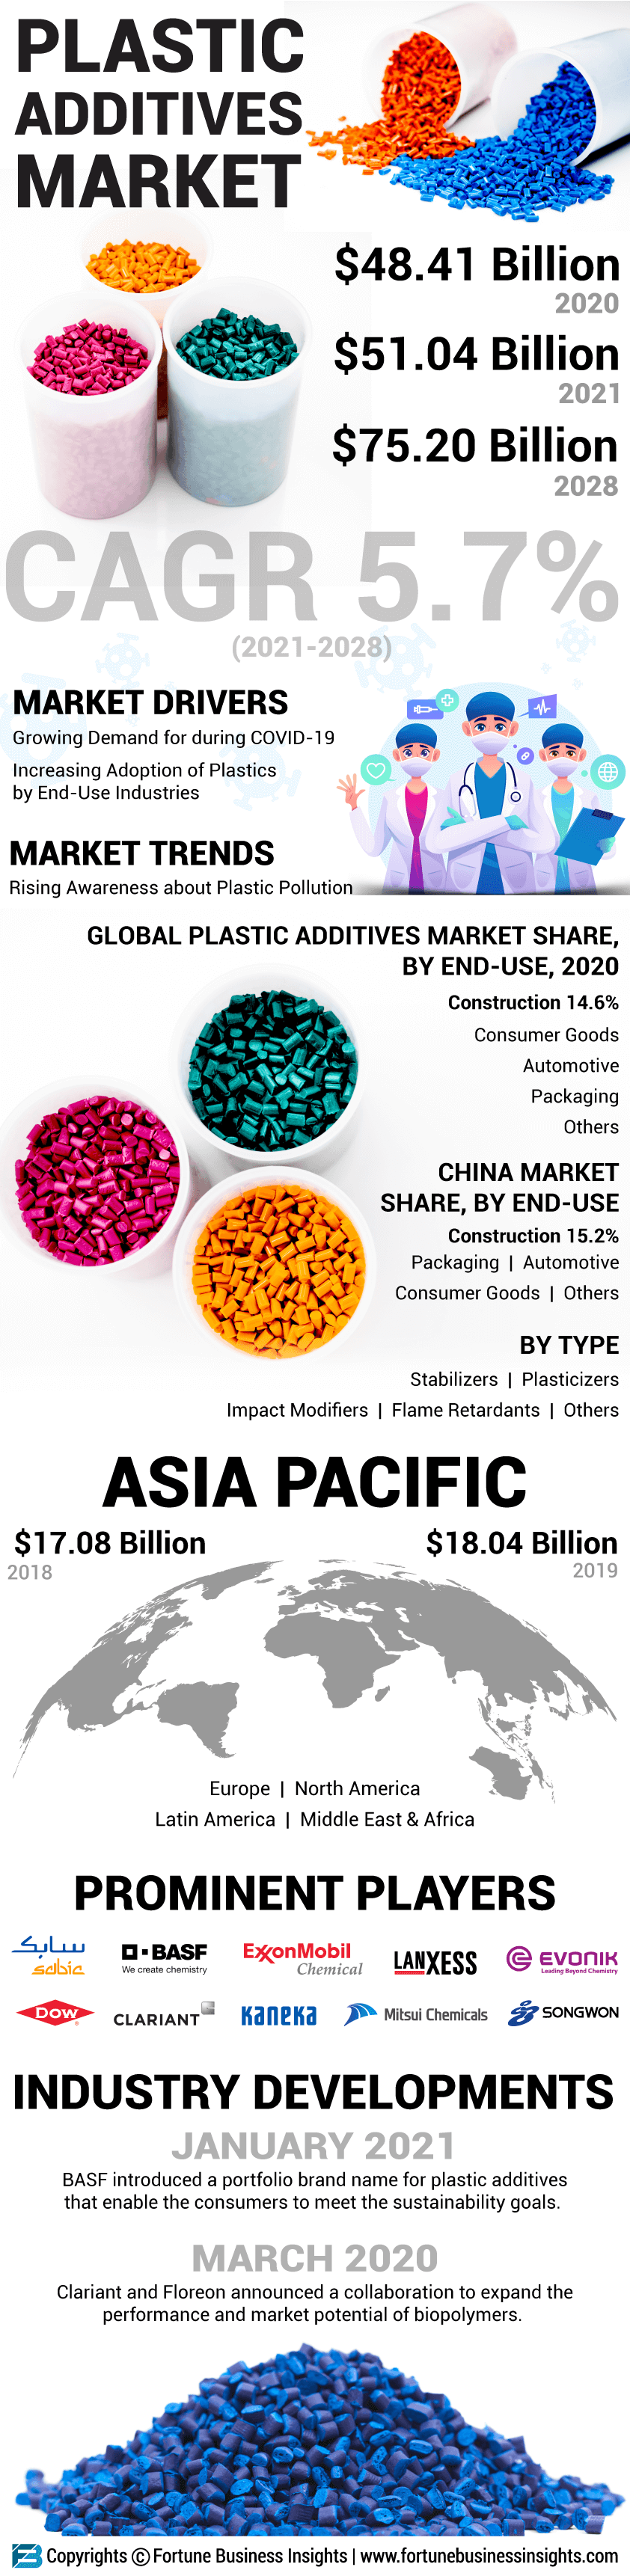 Plastic Additives Market 